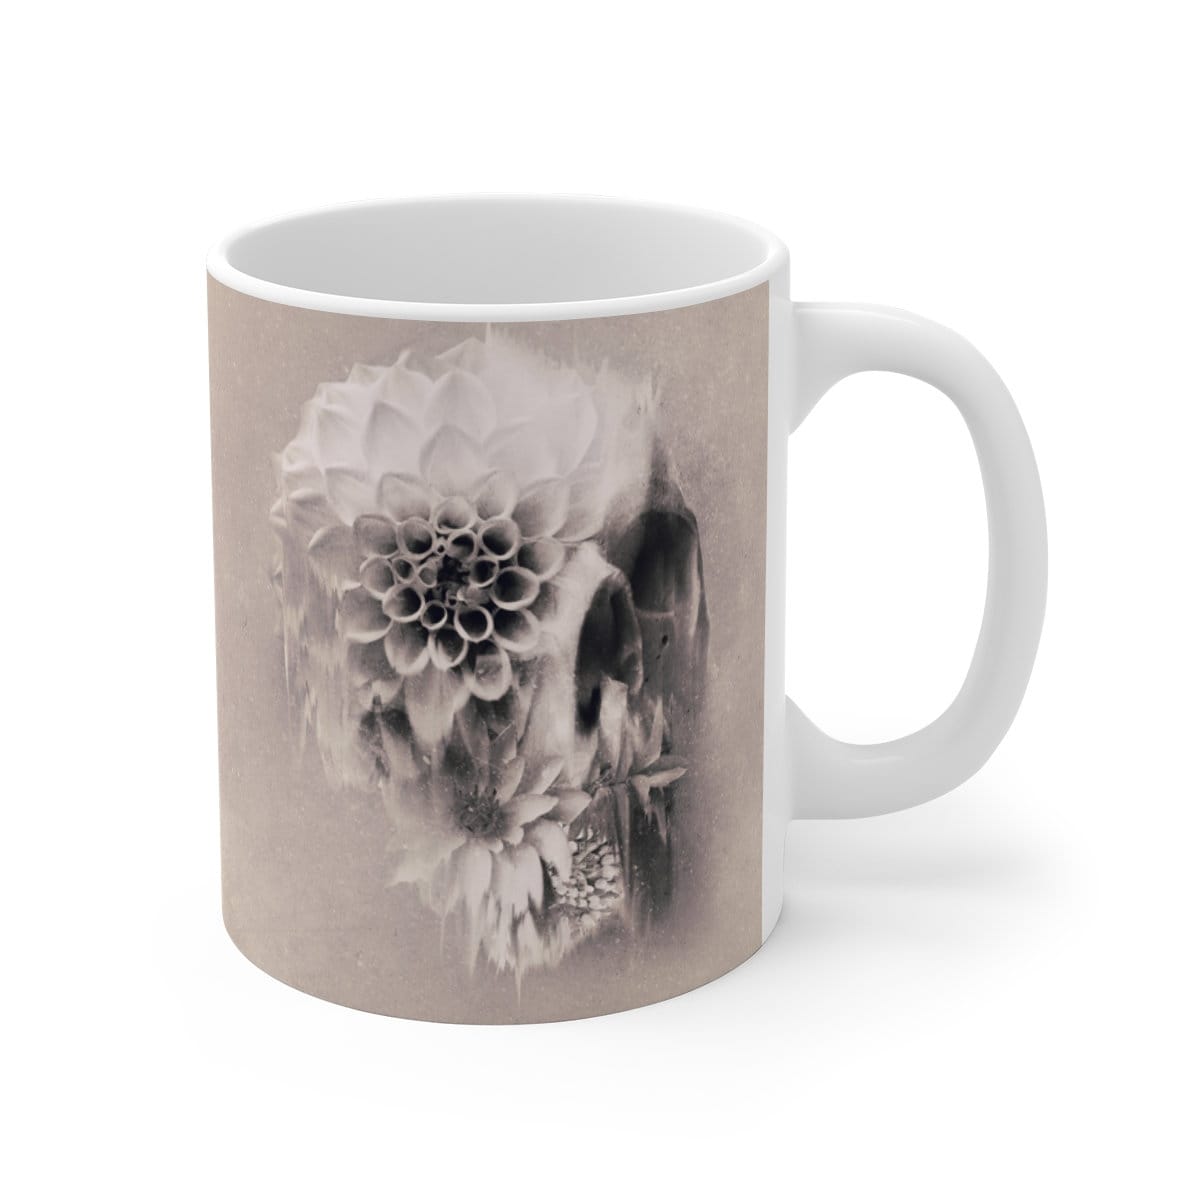 Skull Mug Gift, Floral Sugar Skull Mug, Boho Skull Ceramic Coffee Mug, Gothic Flower Skull Mug, Sugar Skull Art Gothic Kitchenware Gift